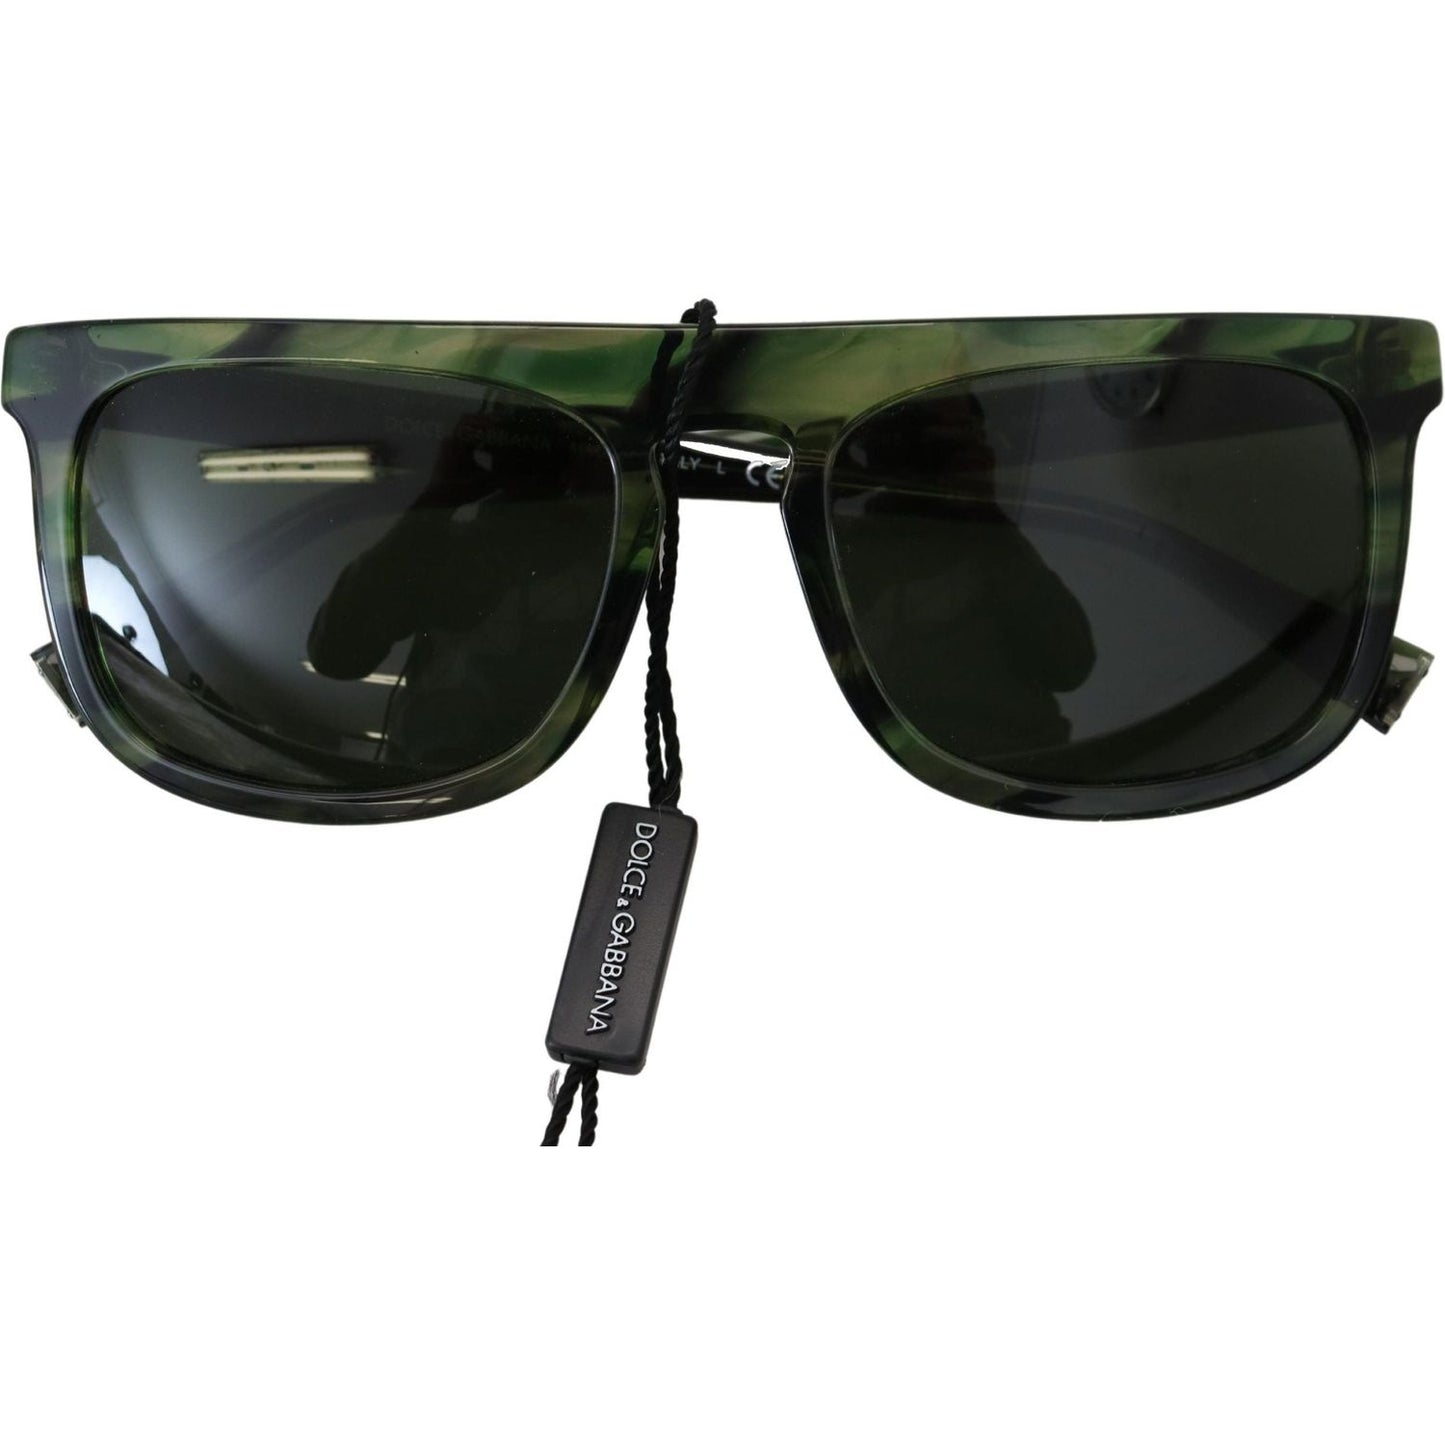 Dolce & Gabbana Chic Green Acetate Women's Sunglasses green-acetate-full-rim-frame-women-dg4288-sunglasses IMG_4741-scaled-21a82eab-5dd.jpg